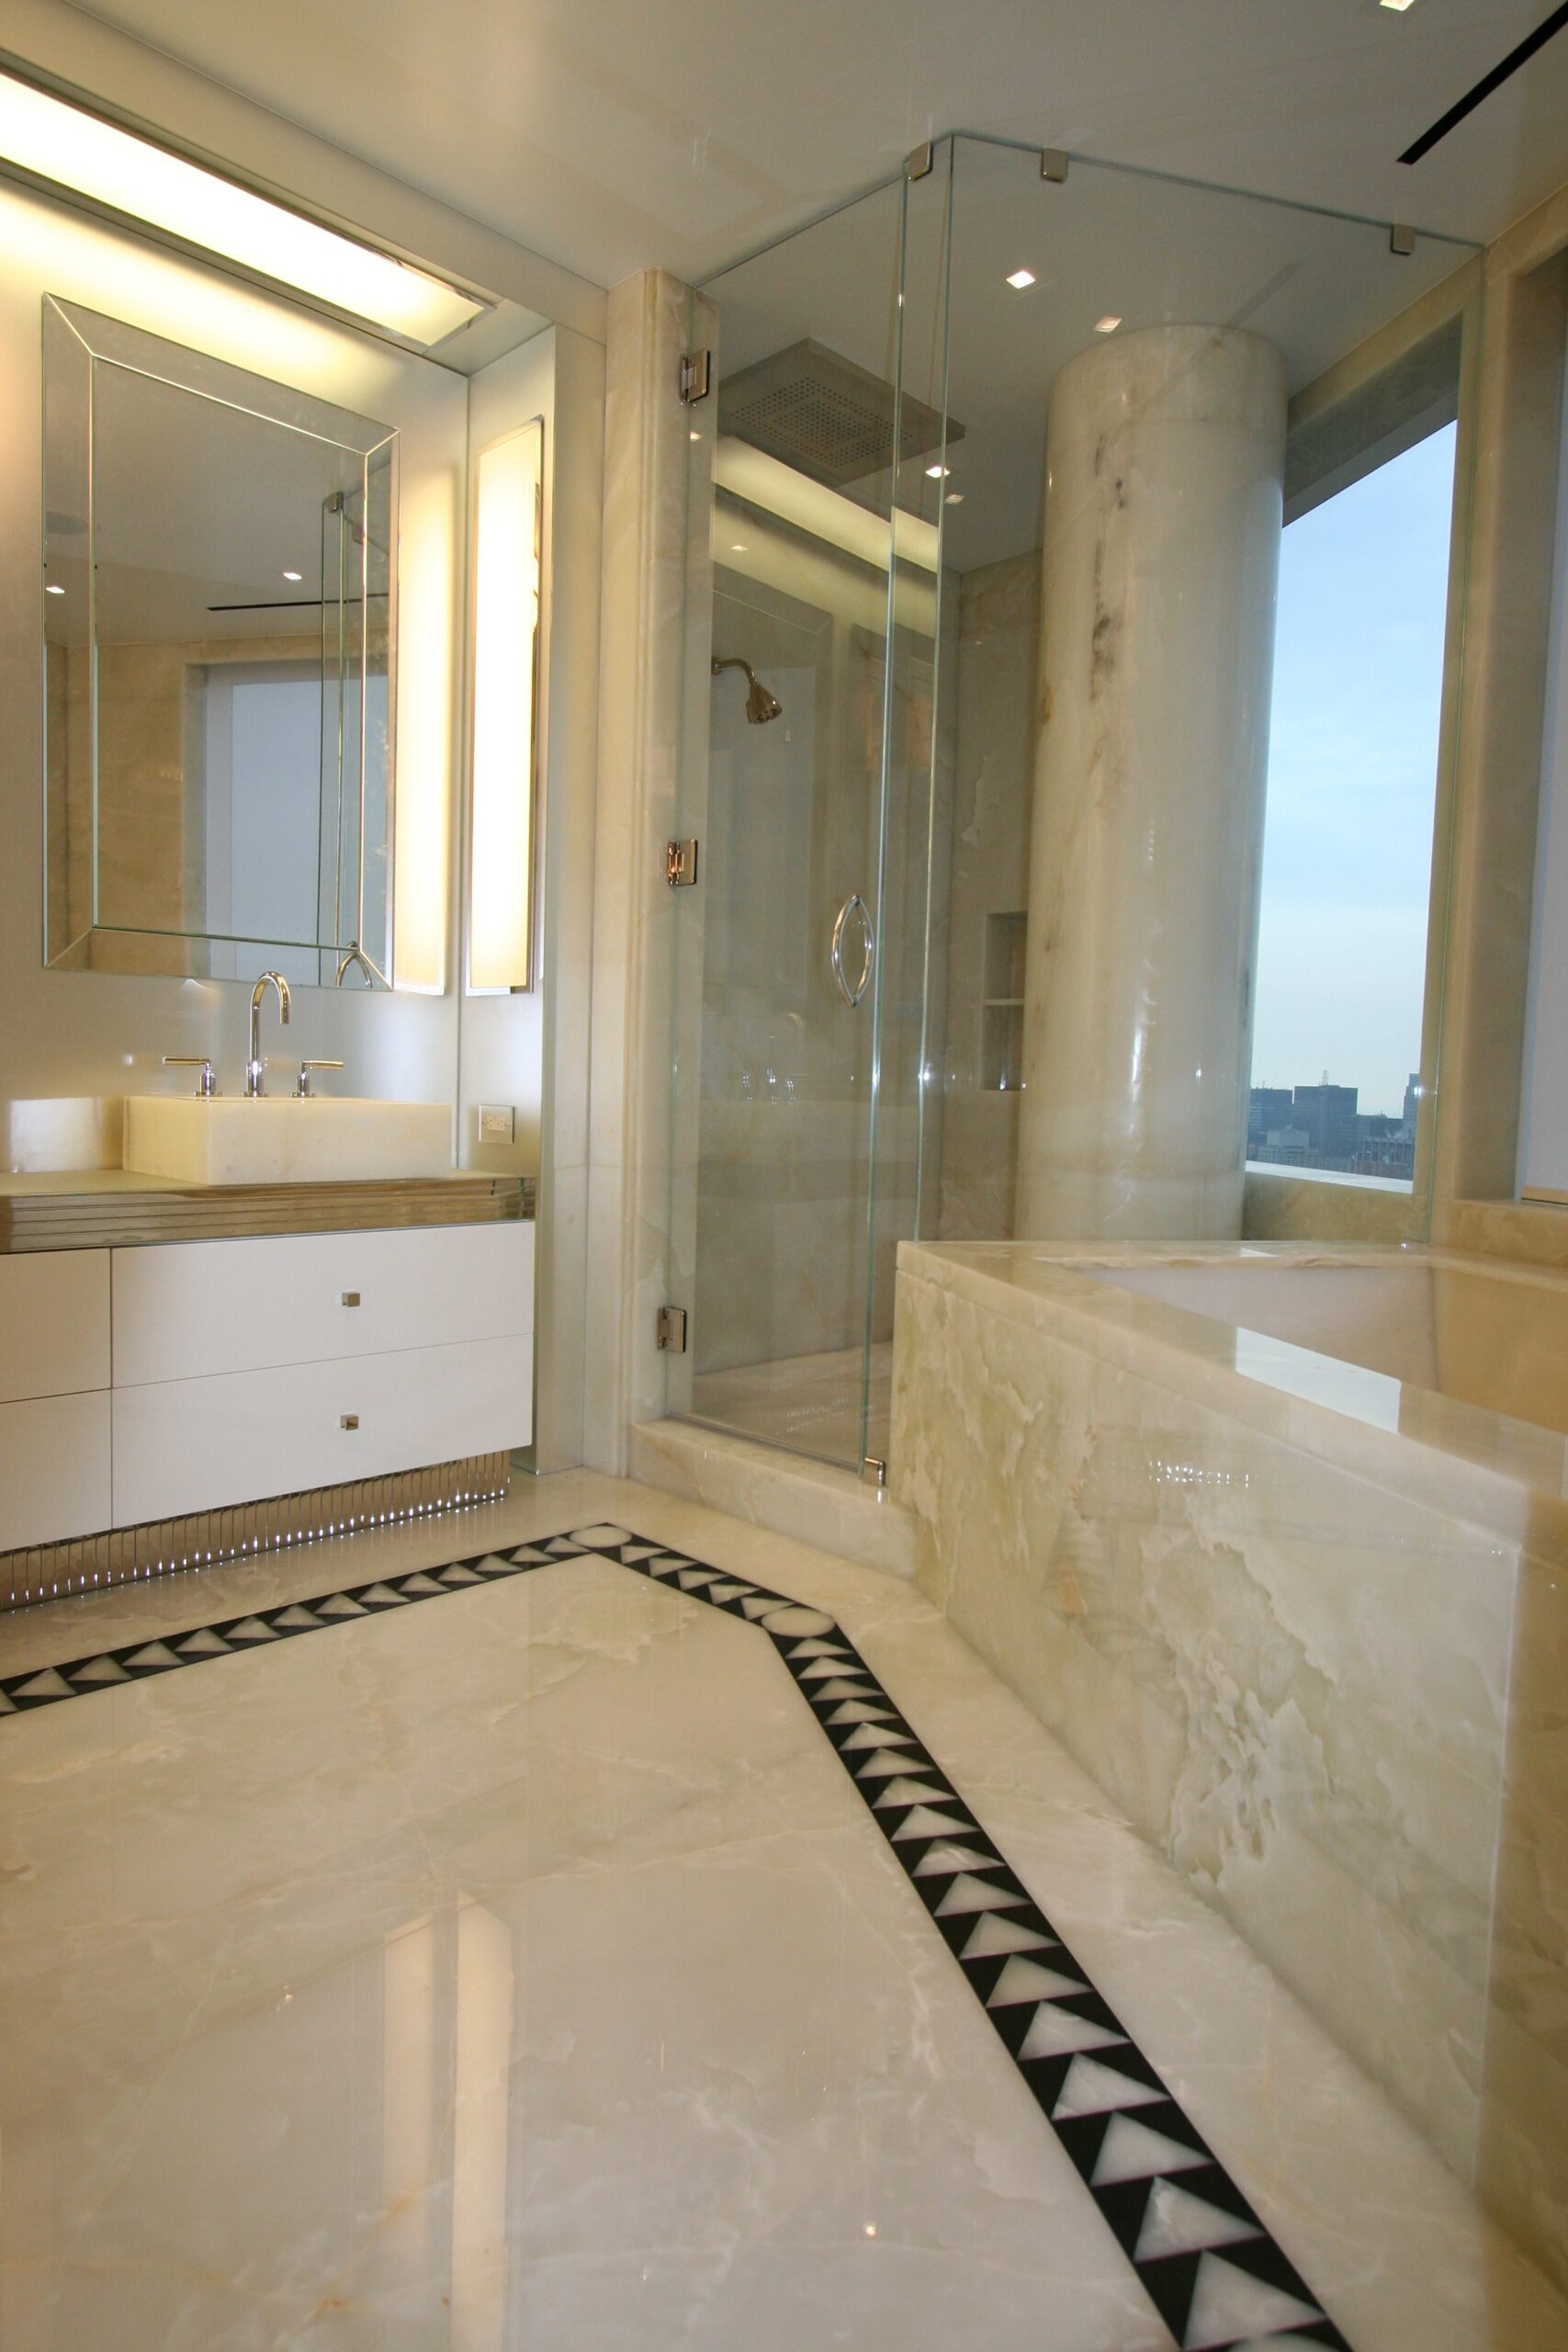 Master bathroom with white onyx floor, walls, sinks, bathtub and column